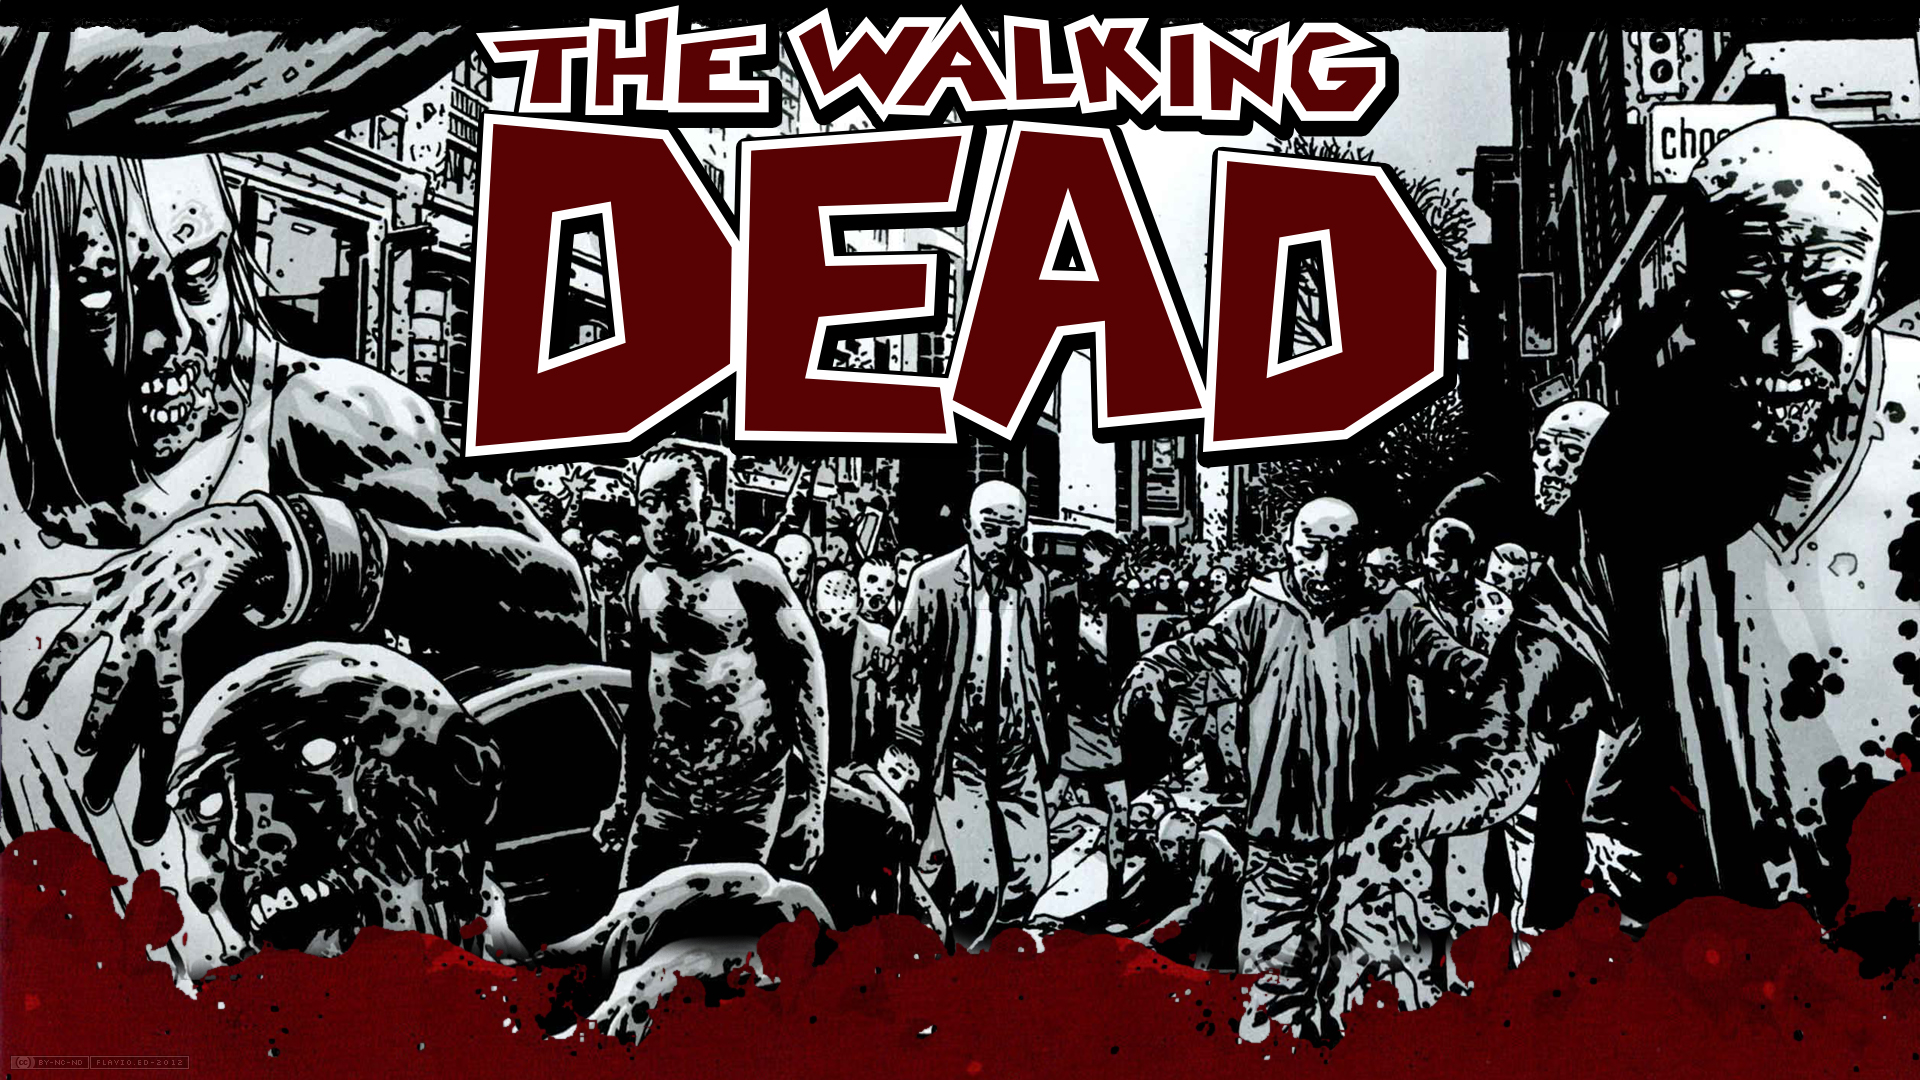 Walking Dead Image Ics Gs Wallpaper